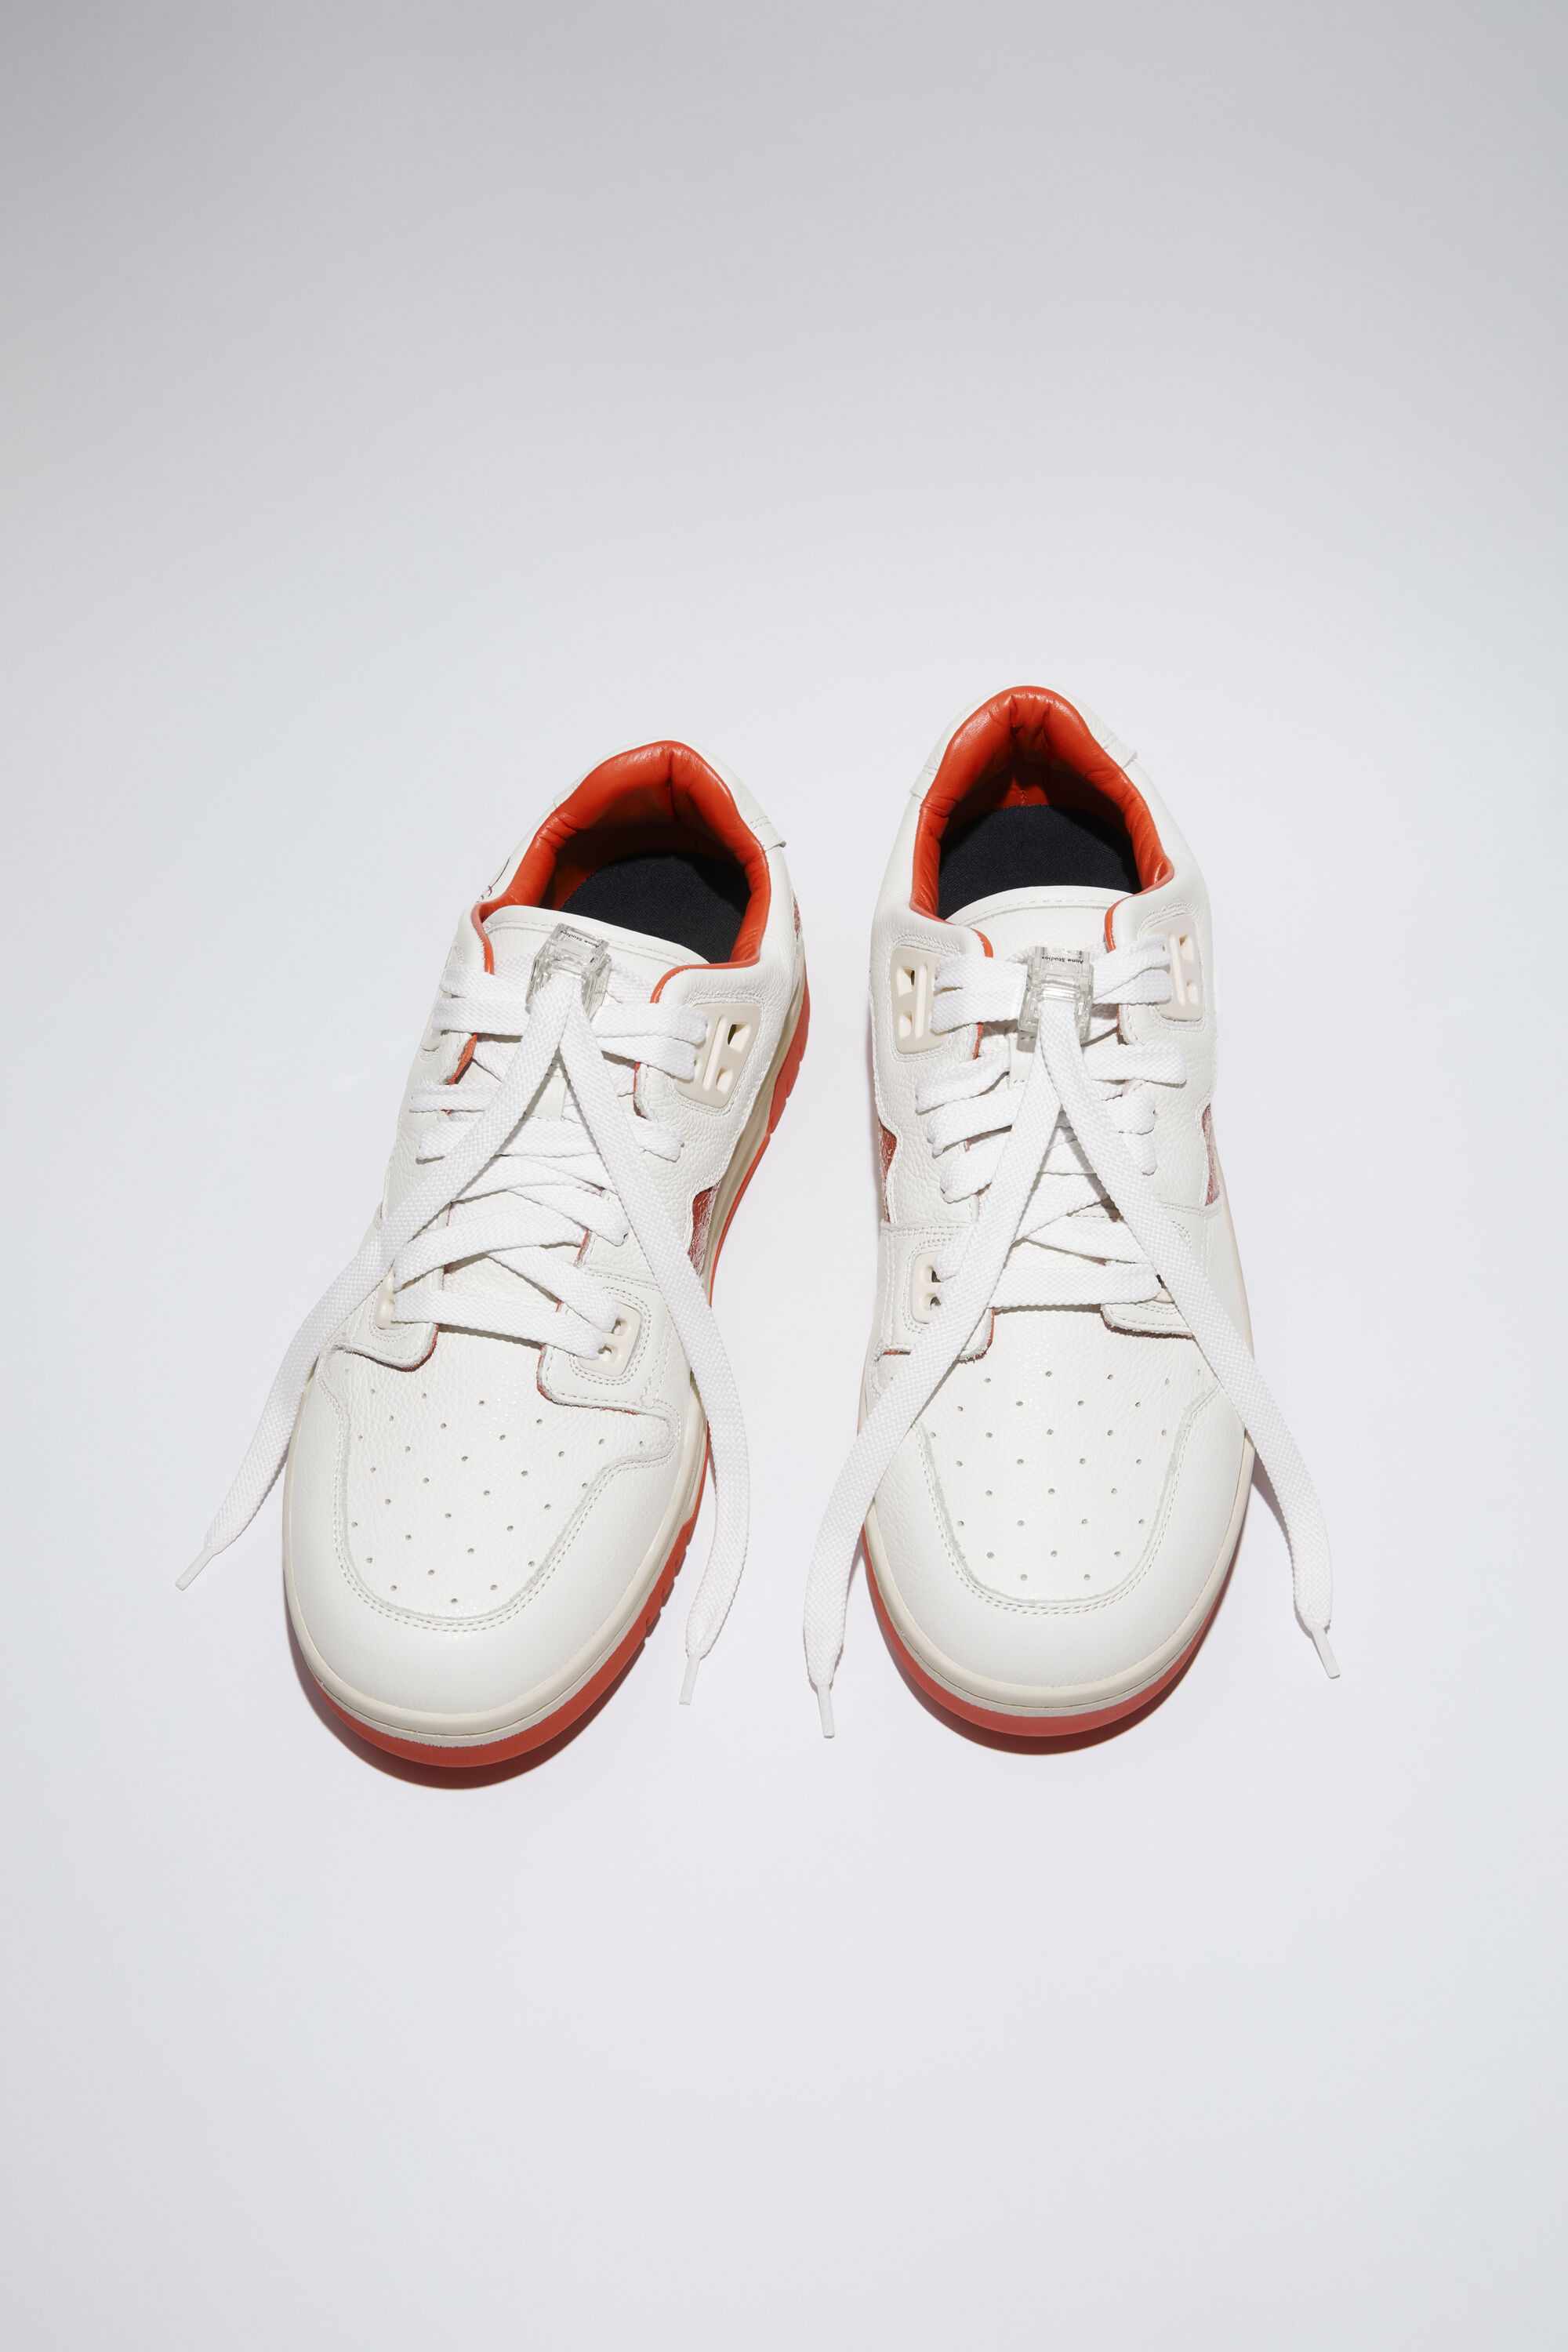 Acne Studios - Low top sneakers - White/orange